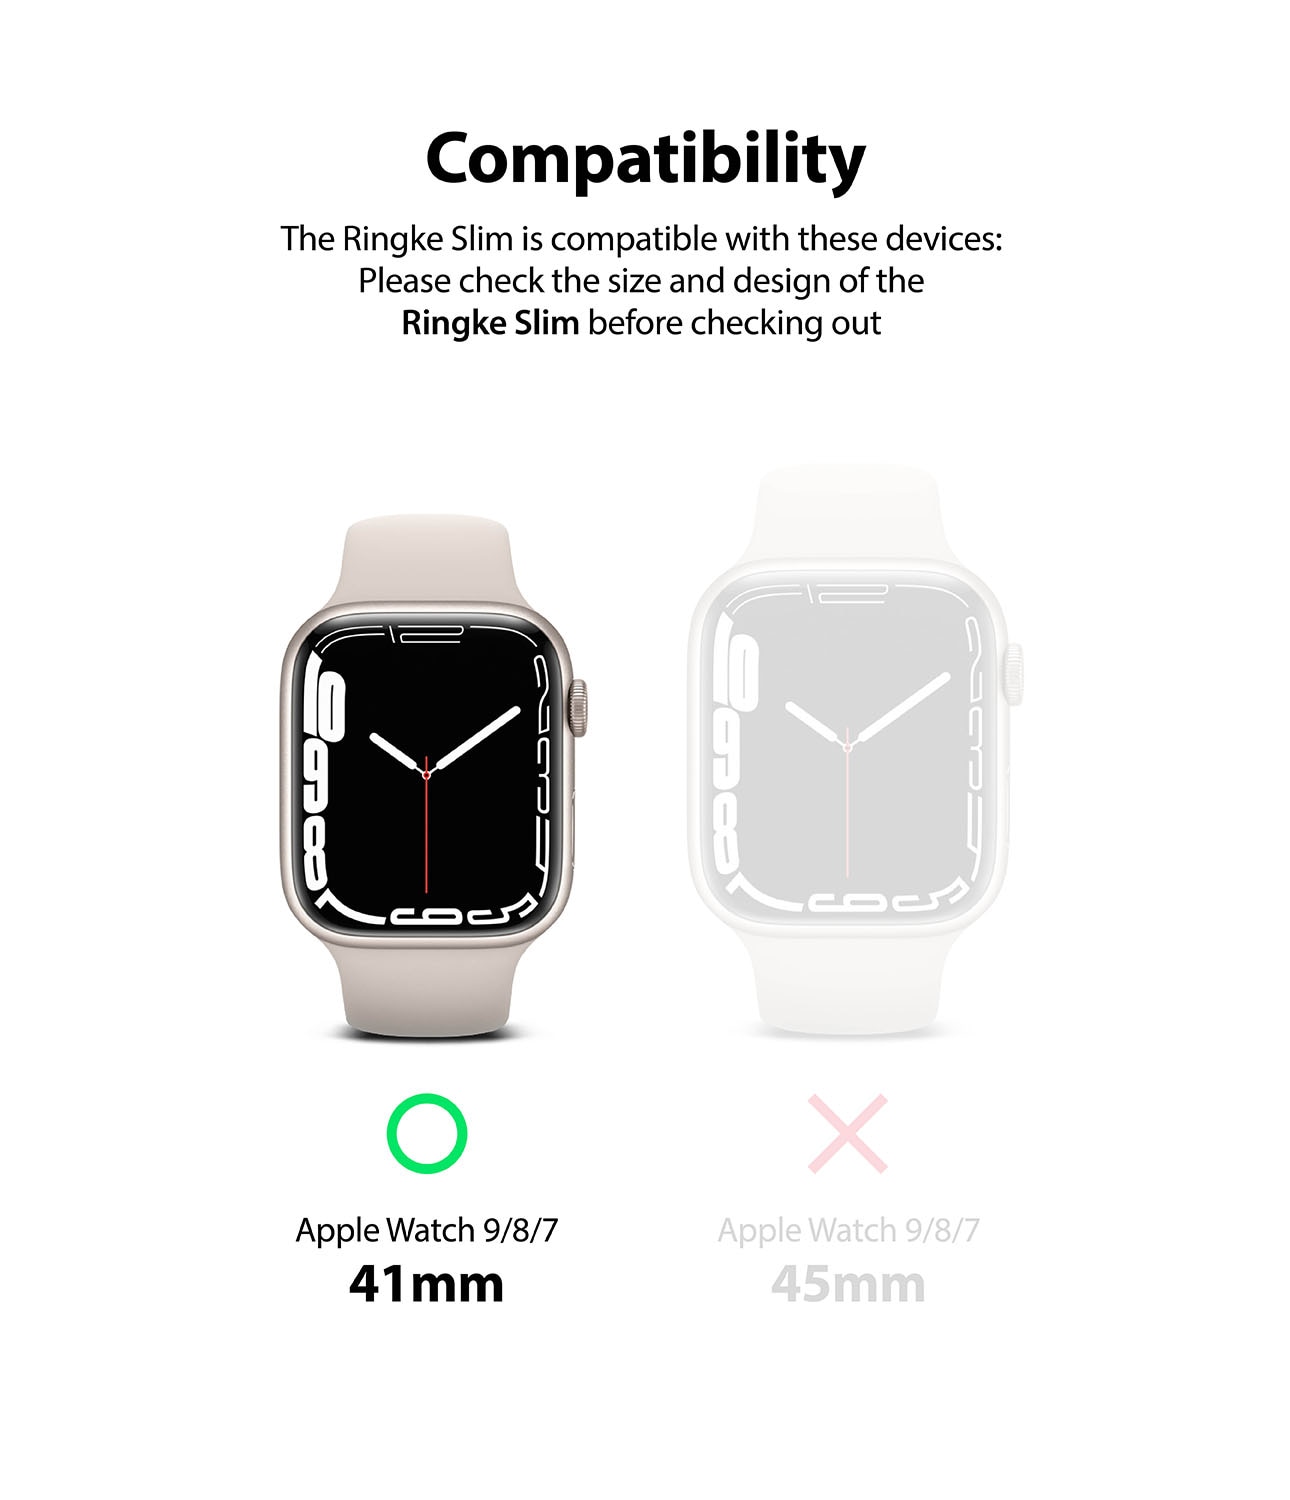 Apple Watch 41mm Series 8 Slim Case (2-pack) Pink & Clear